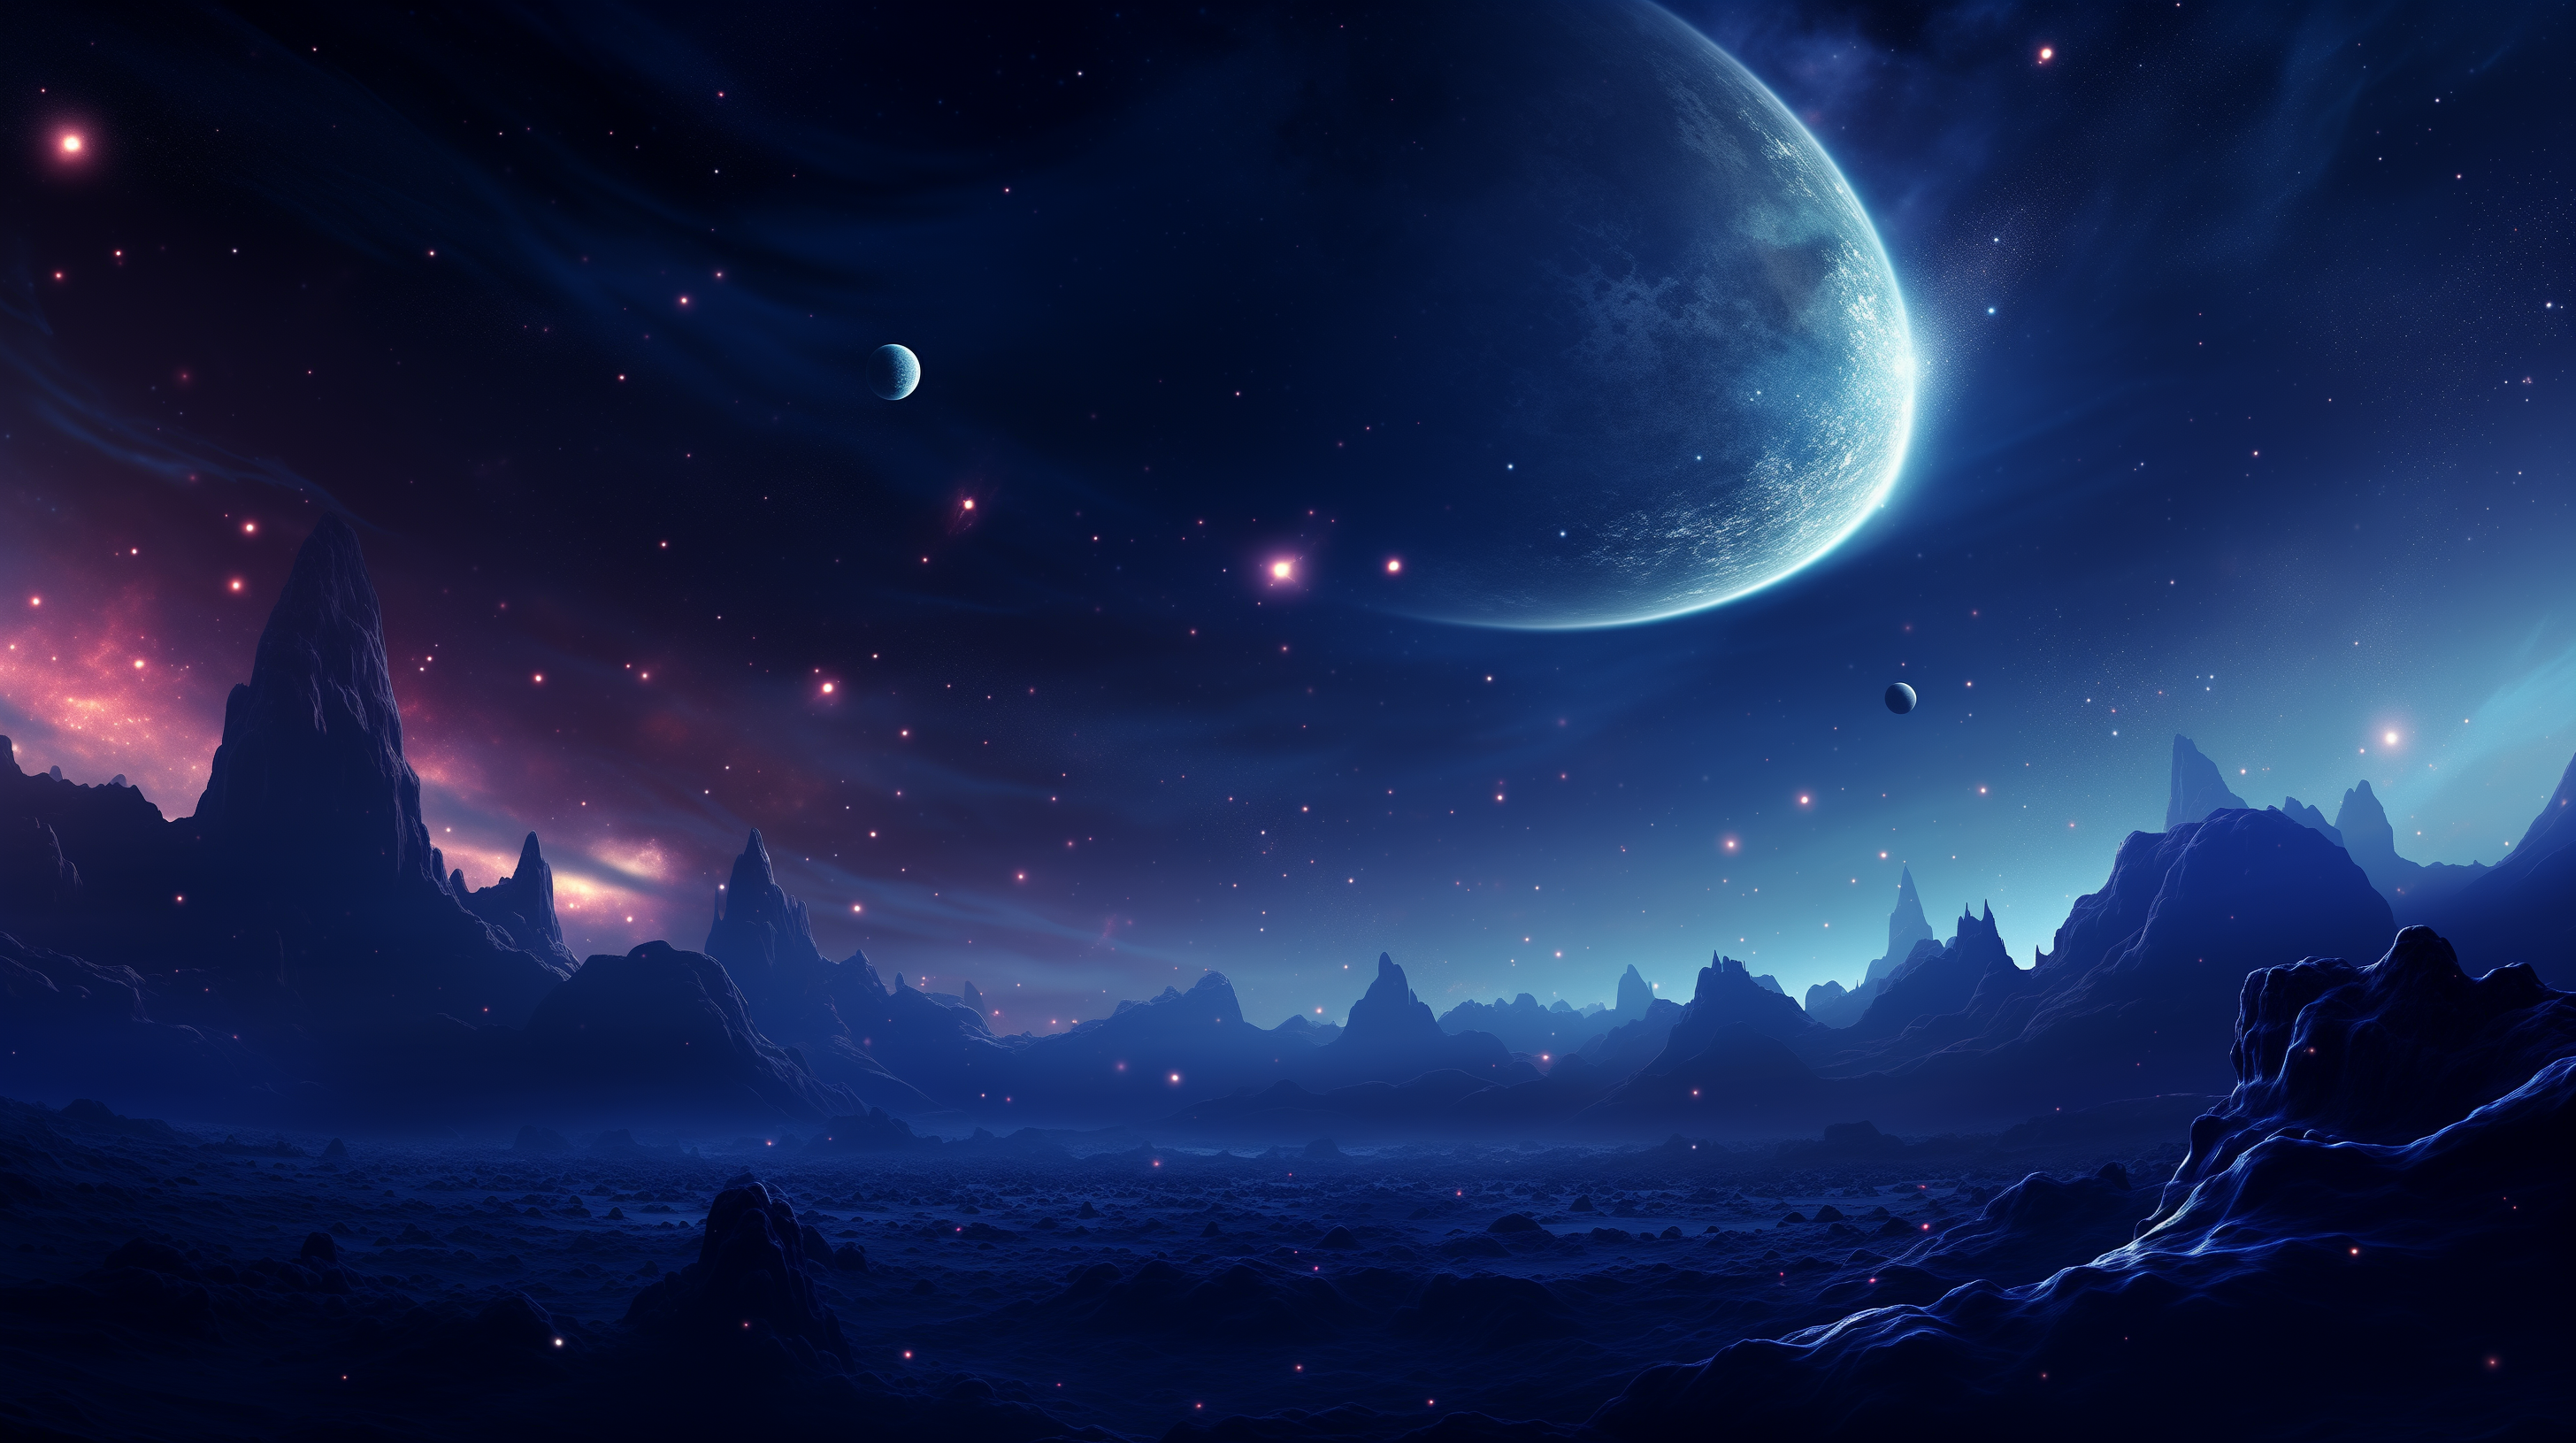 Galactic Dreamscape HD Wallpaper Starry Sky And Mystical Plas